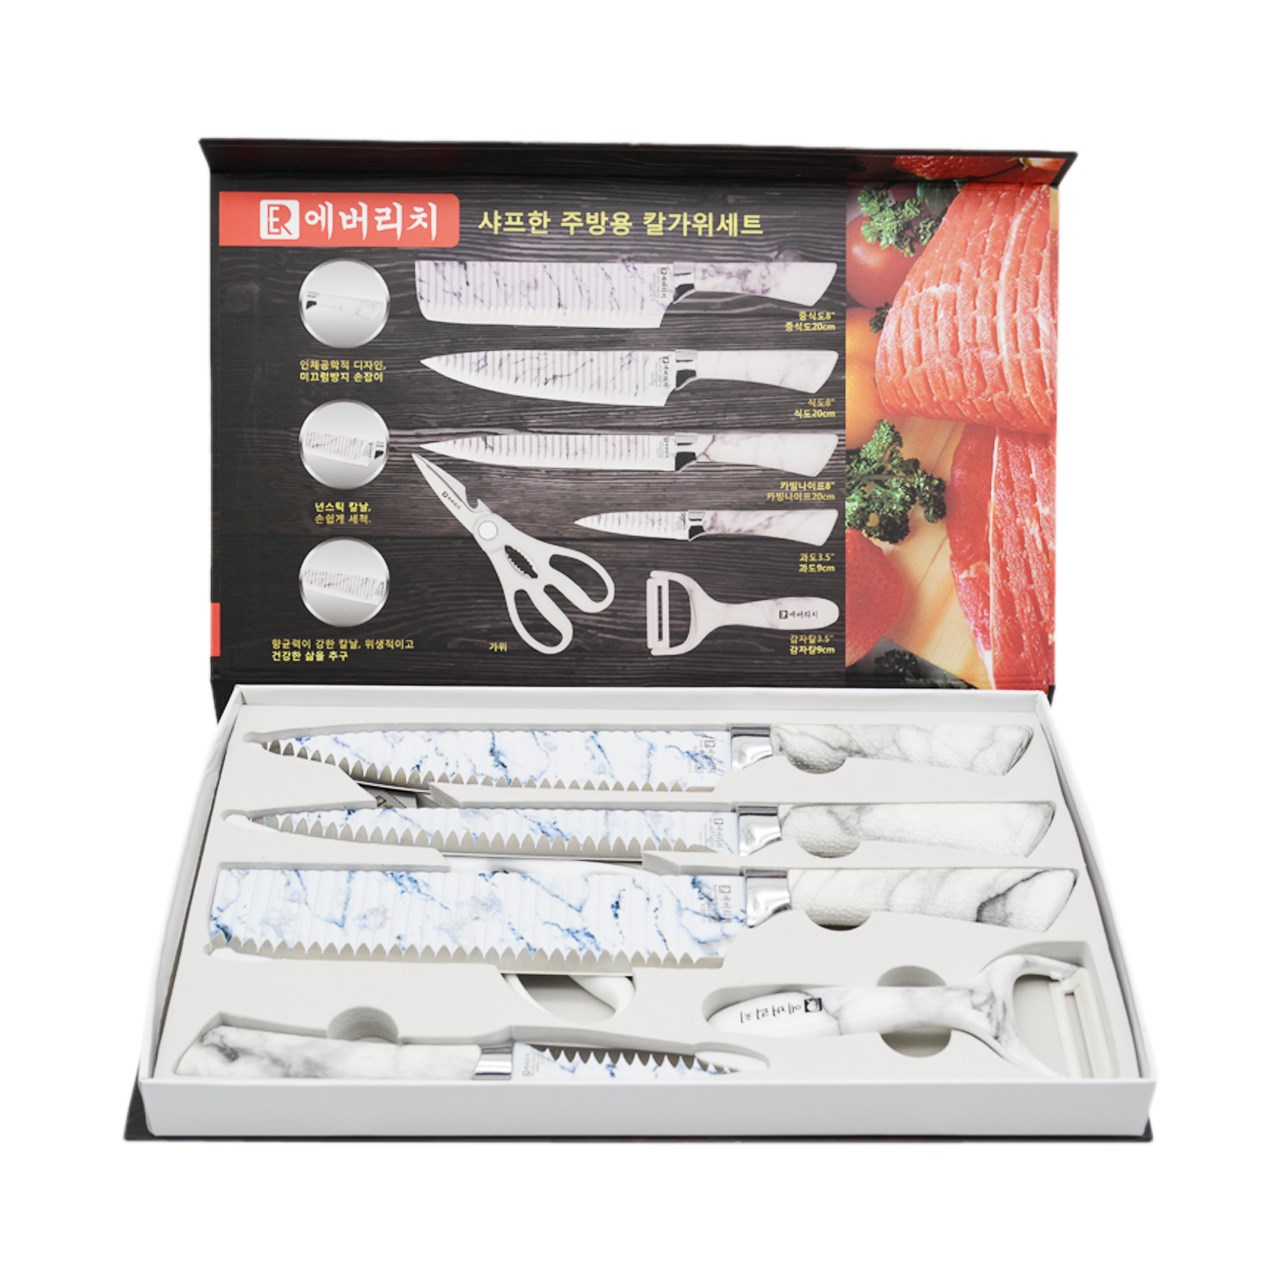 ست چاقوی آشپزخانه 6 پارچه اوریچ مدل ER-0238CW